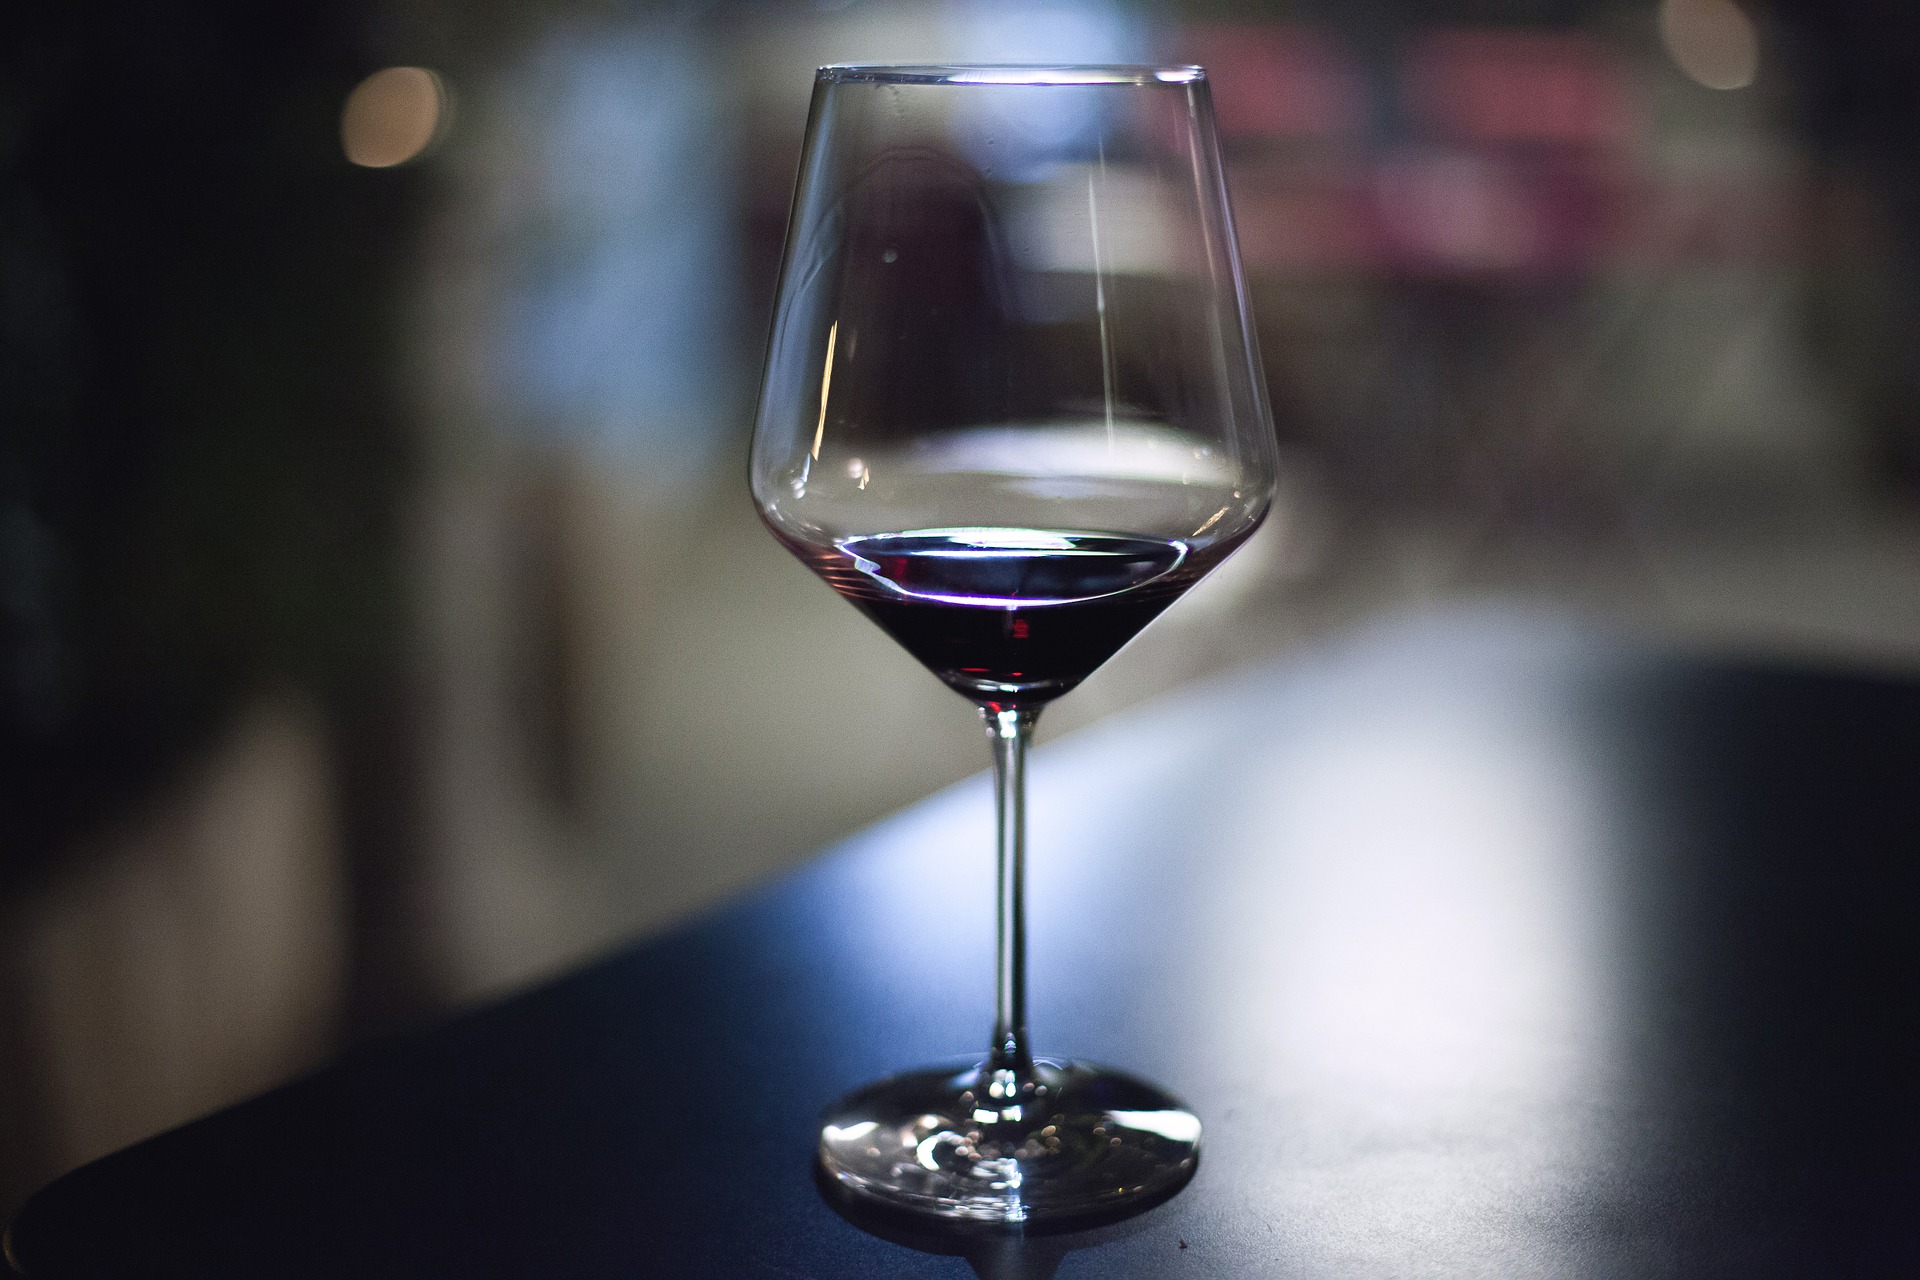 A glass of Cabernet Sauvignon on a table